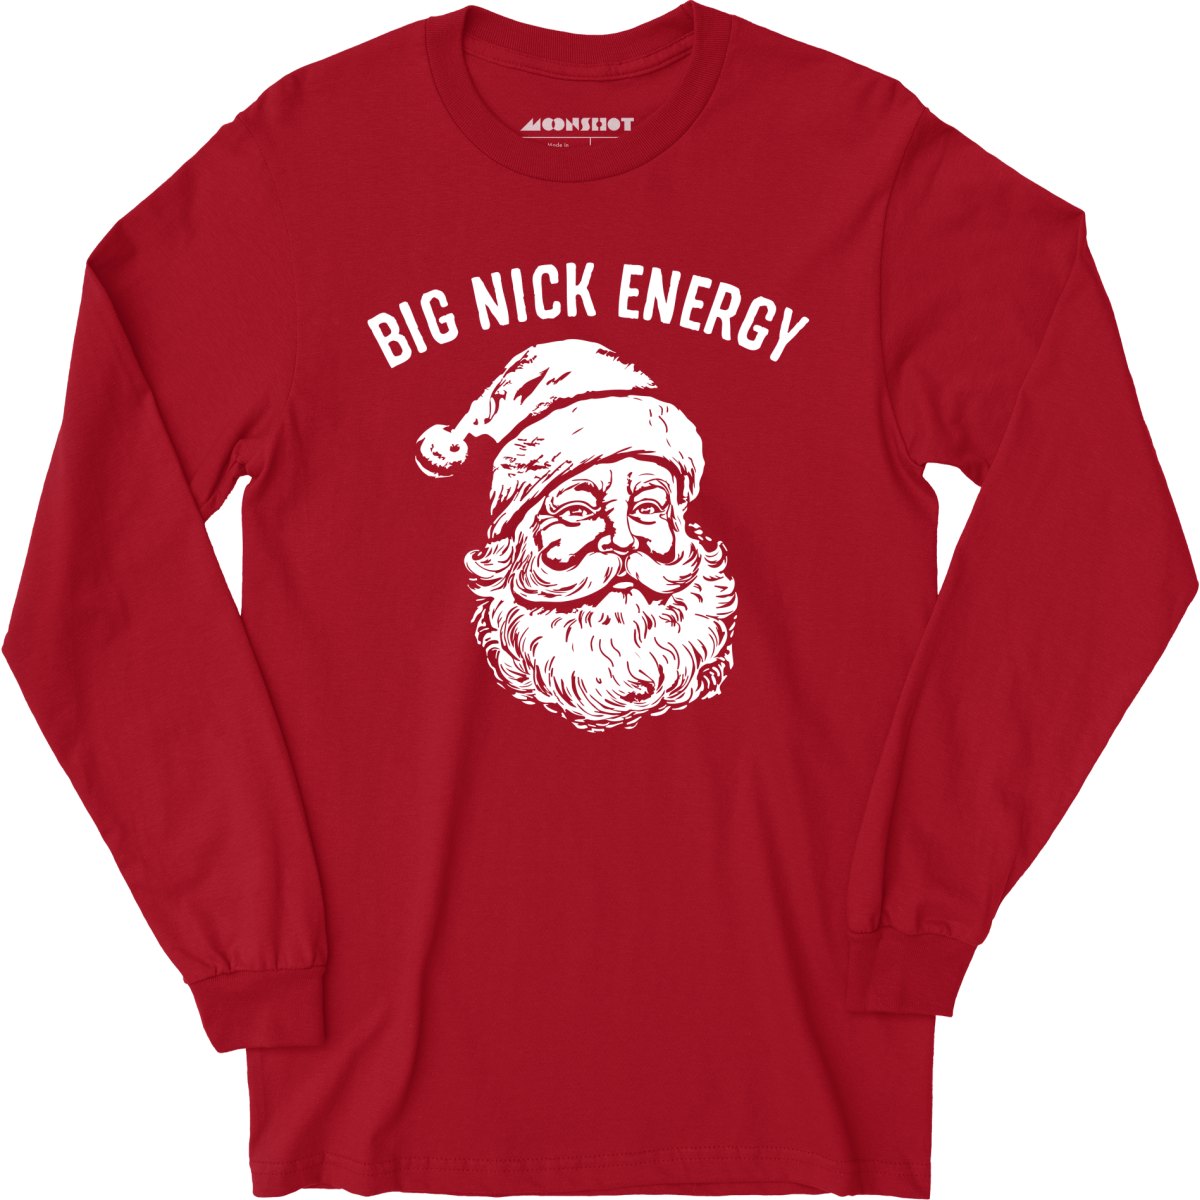 Big Nick Energy - Long Sleeve T-Shirt